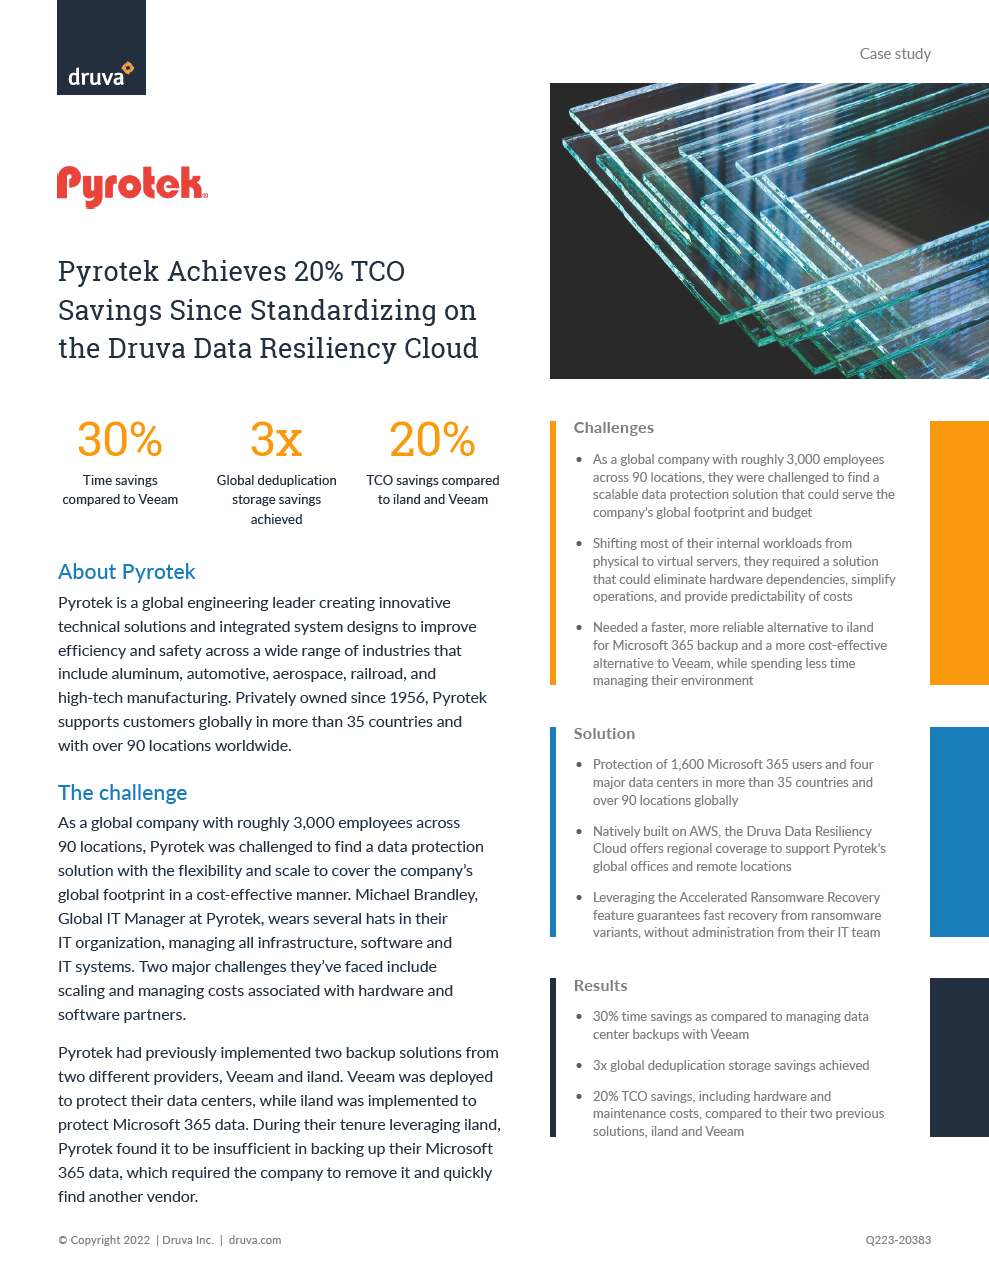 Pyrotek Achieves 20% TCO Savings Since Standardizing on the Druva Data Resiliency Cloud